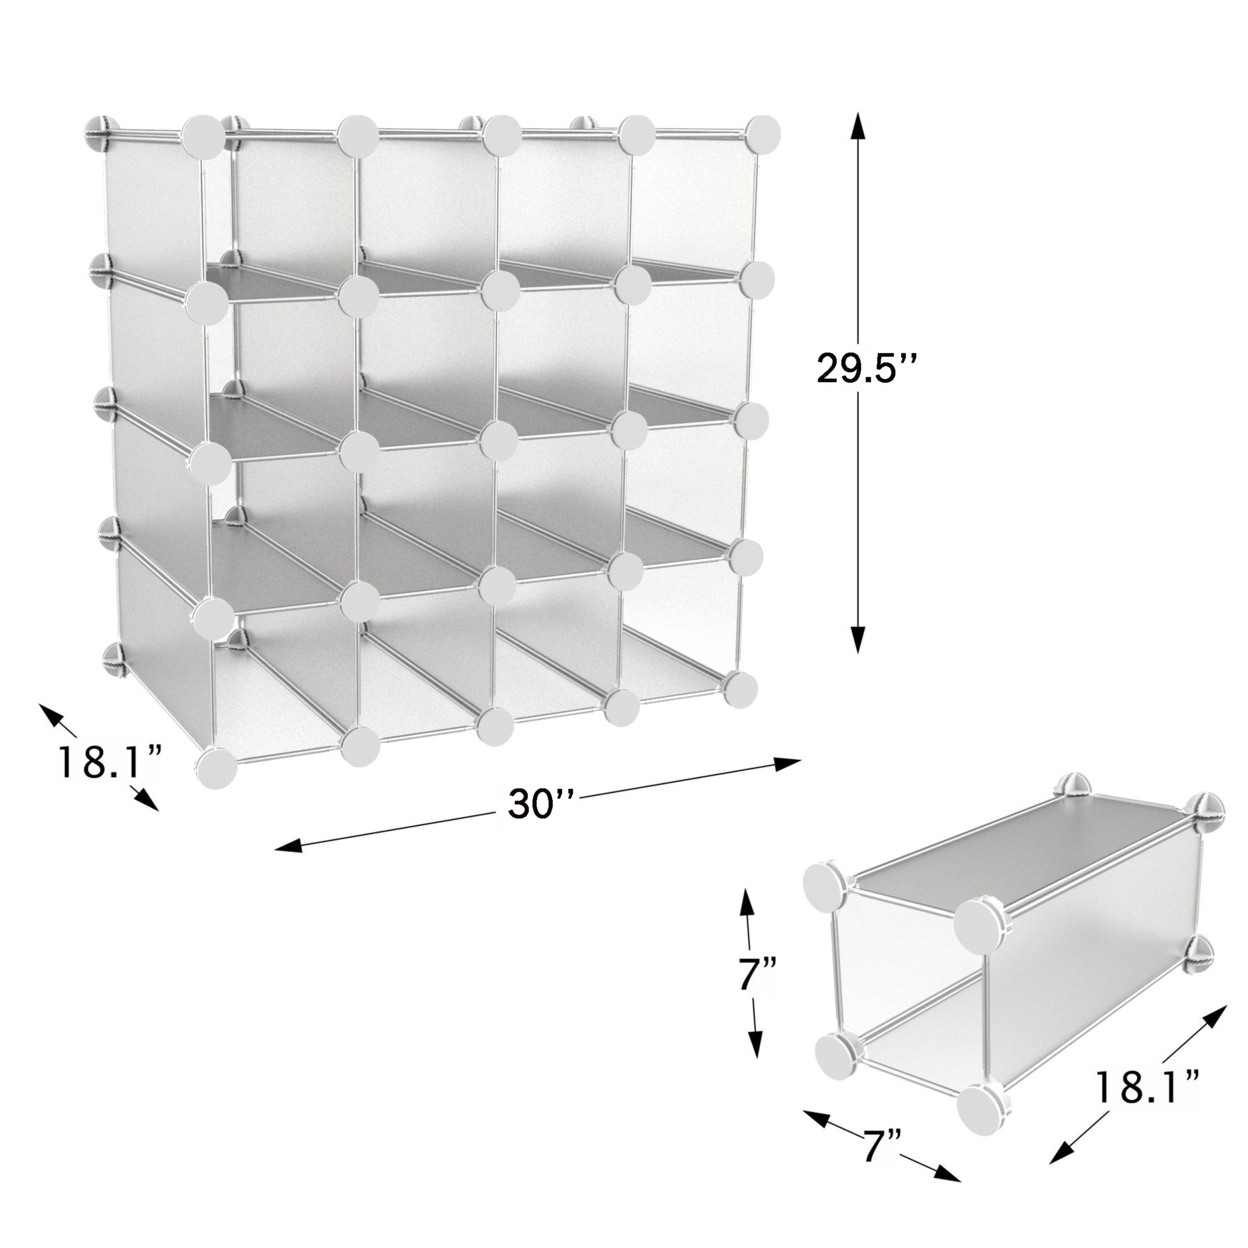 16 Piece Interlocking Storage Cubby Customizable Stackable Modular Plastic Shoe Organizer Shelf Closet Storage Bin System Decor